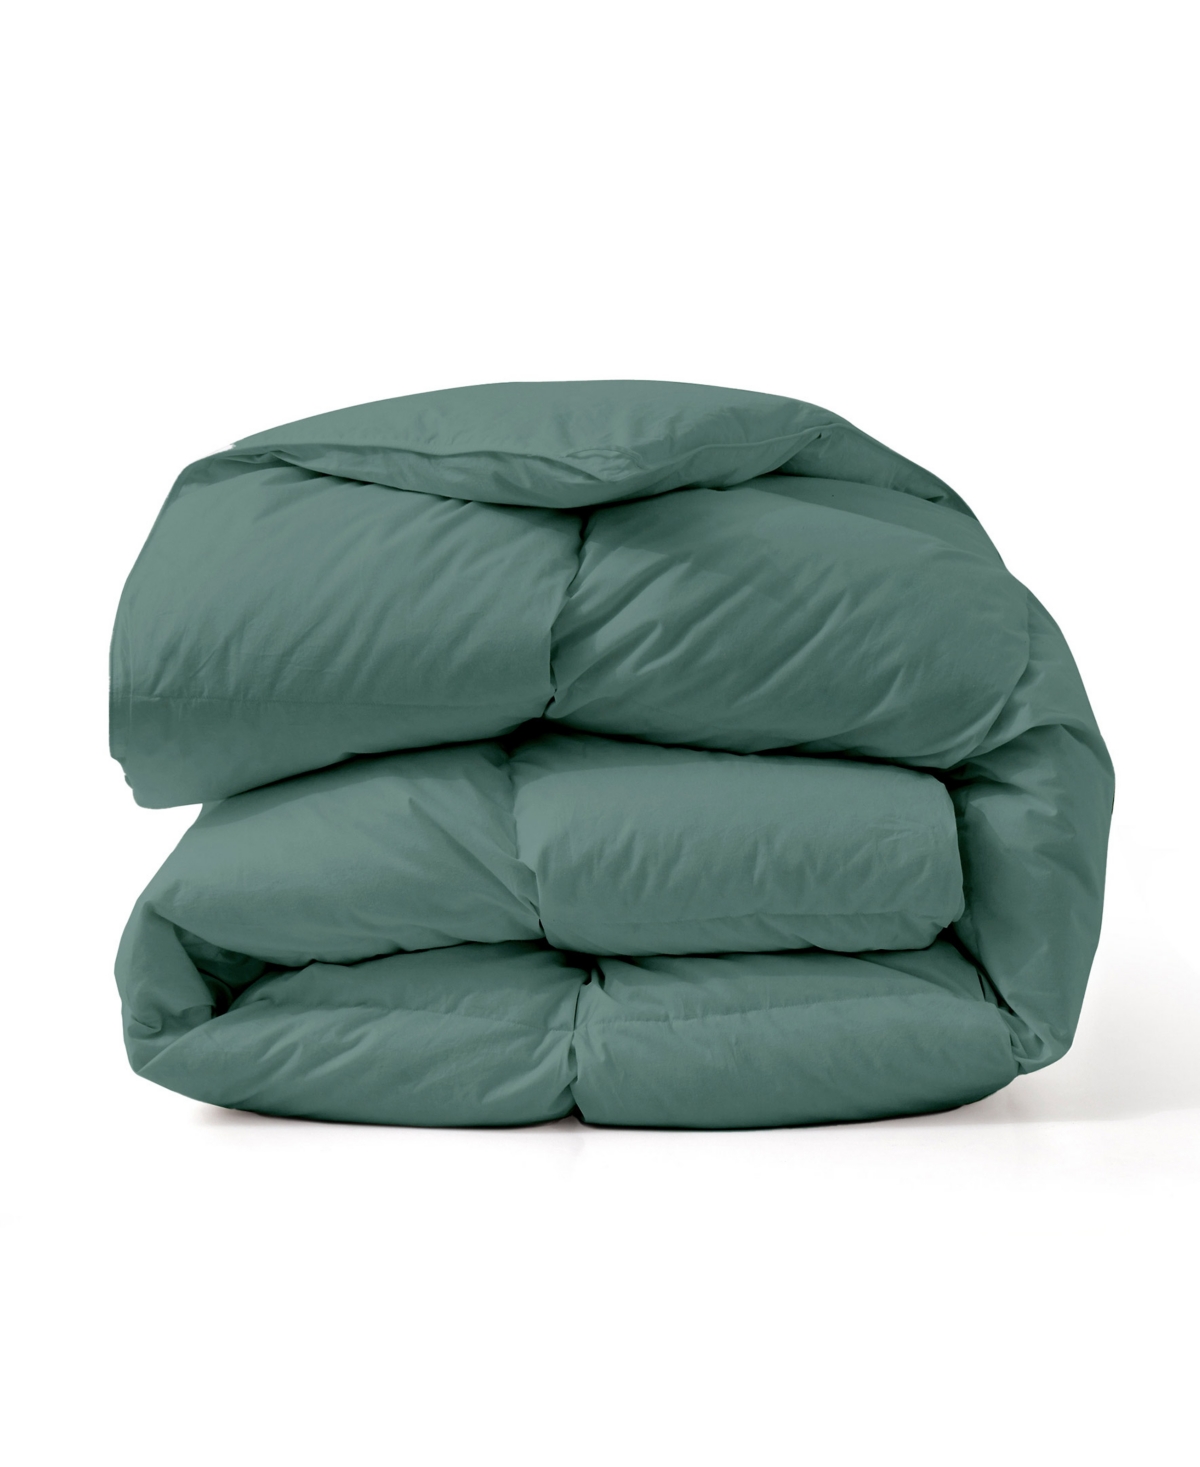 Unikome All Season 300 Thread Count Cotton Goose Down Fiber Comforter, Full/queen In Green